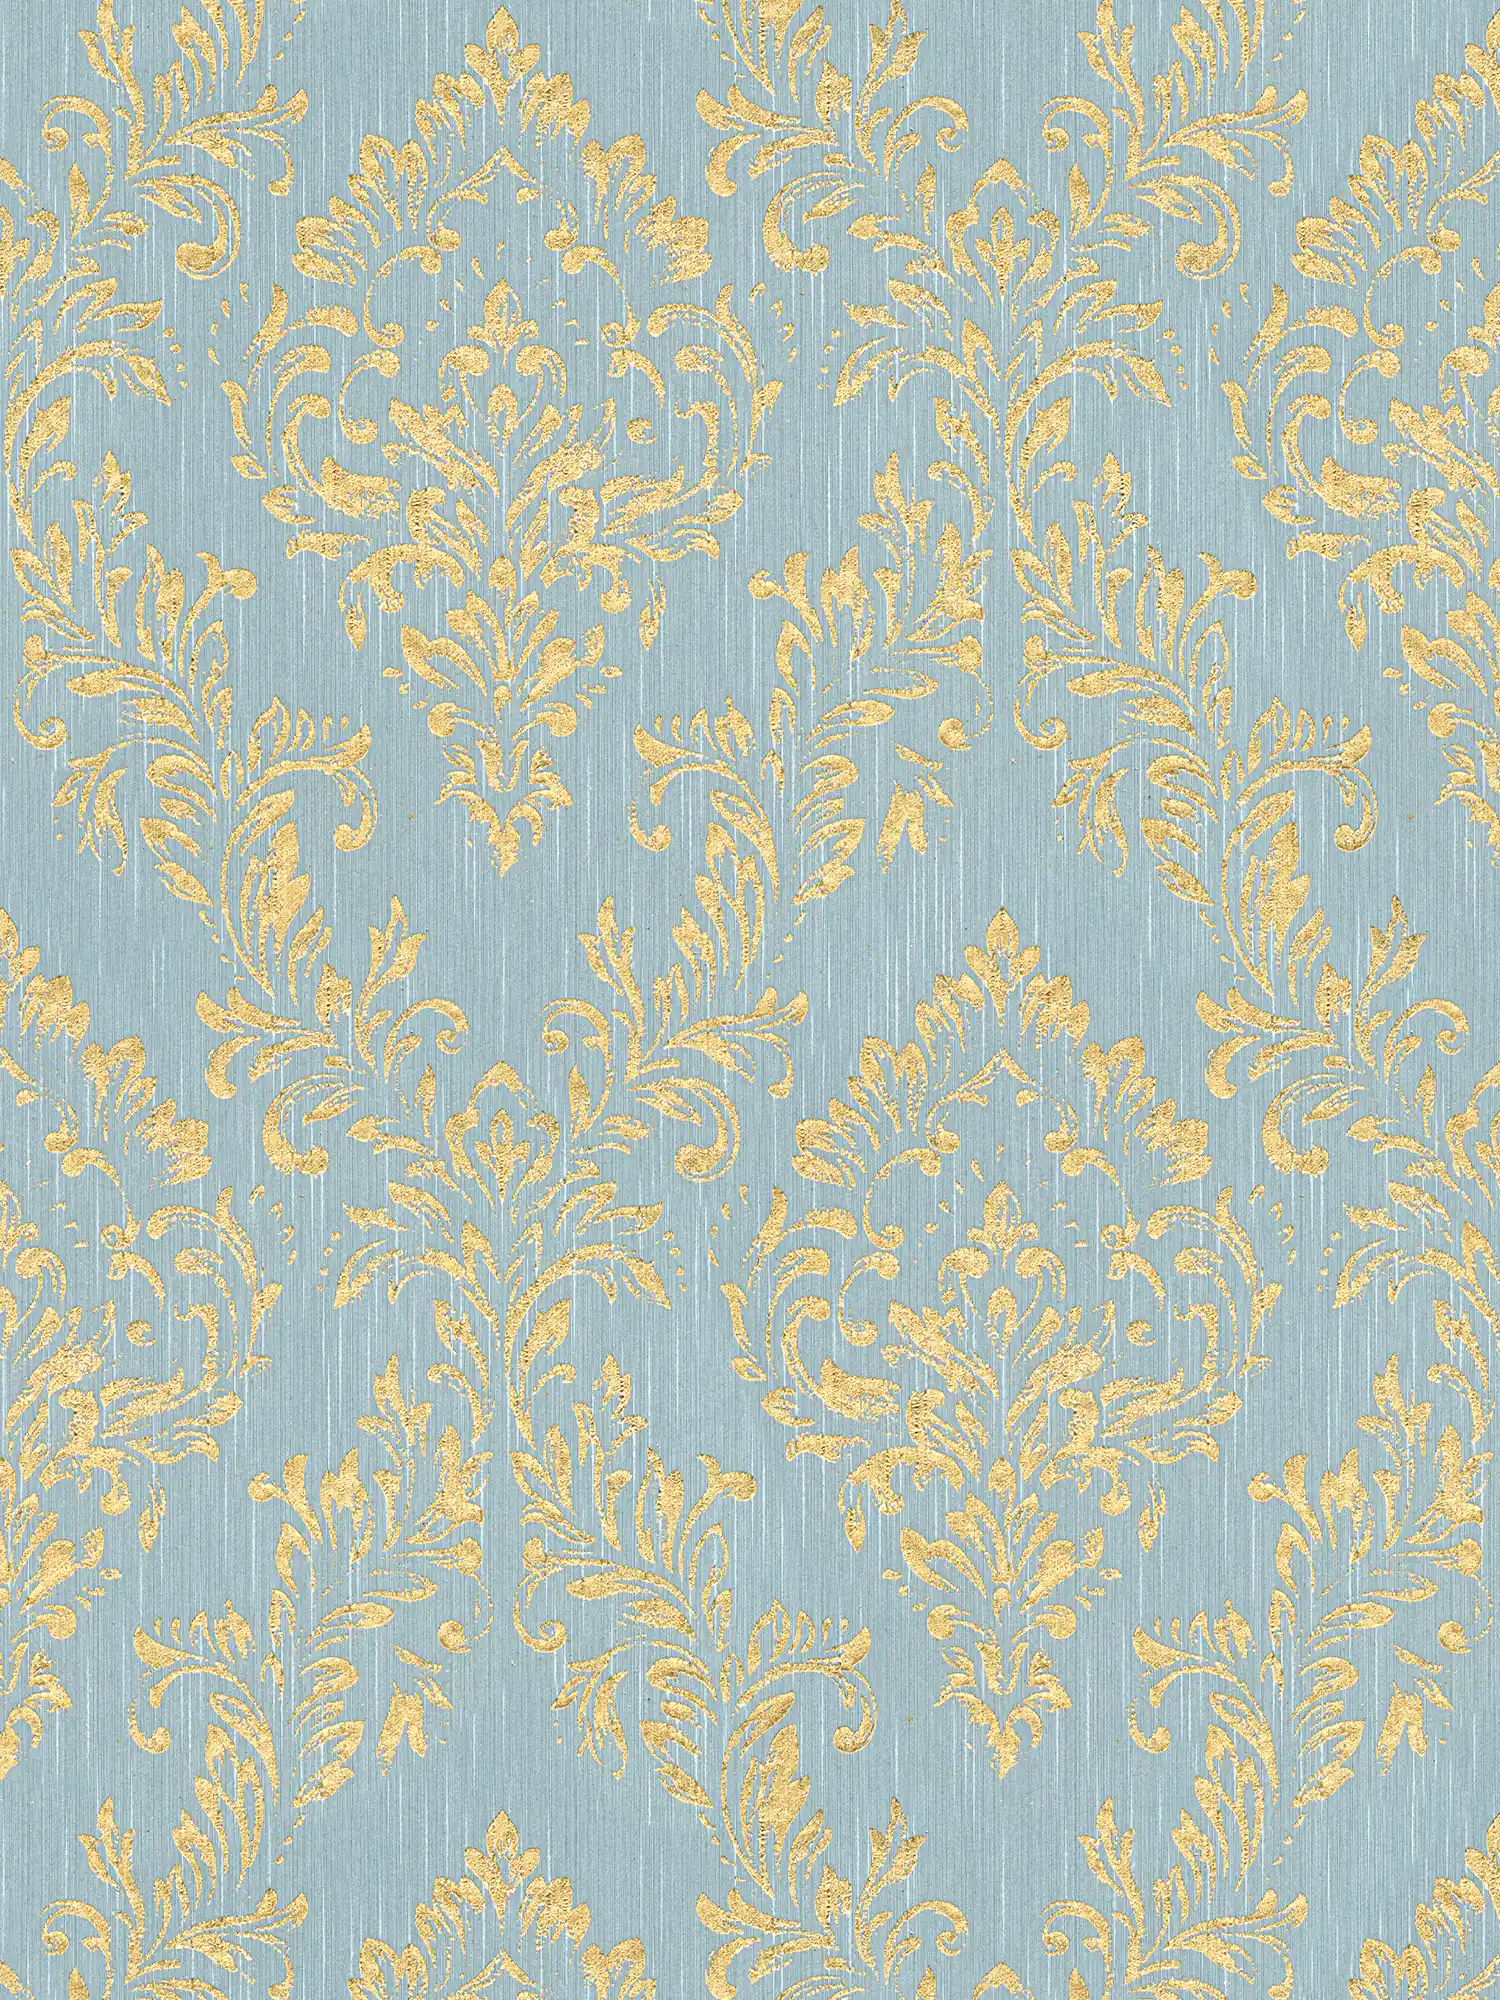 Ornament-Tapete floral mit goldenem Glitzer-Effekt – Gold, Blau, Grün
